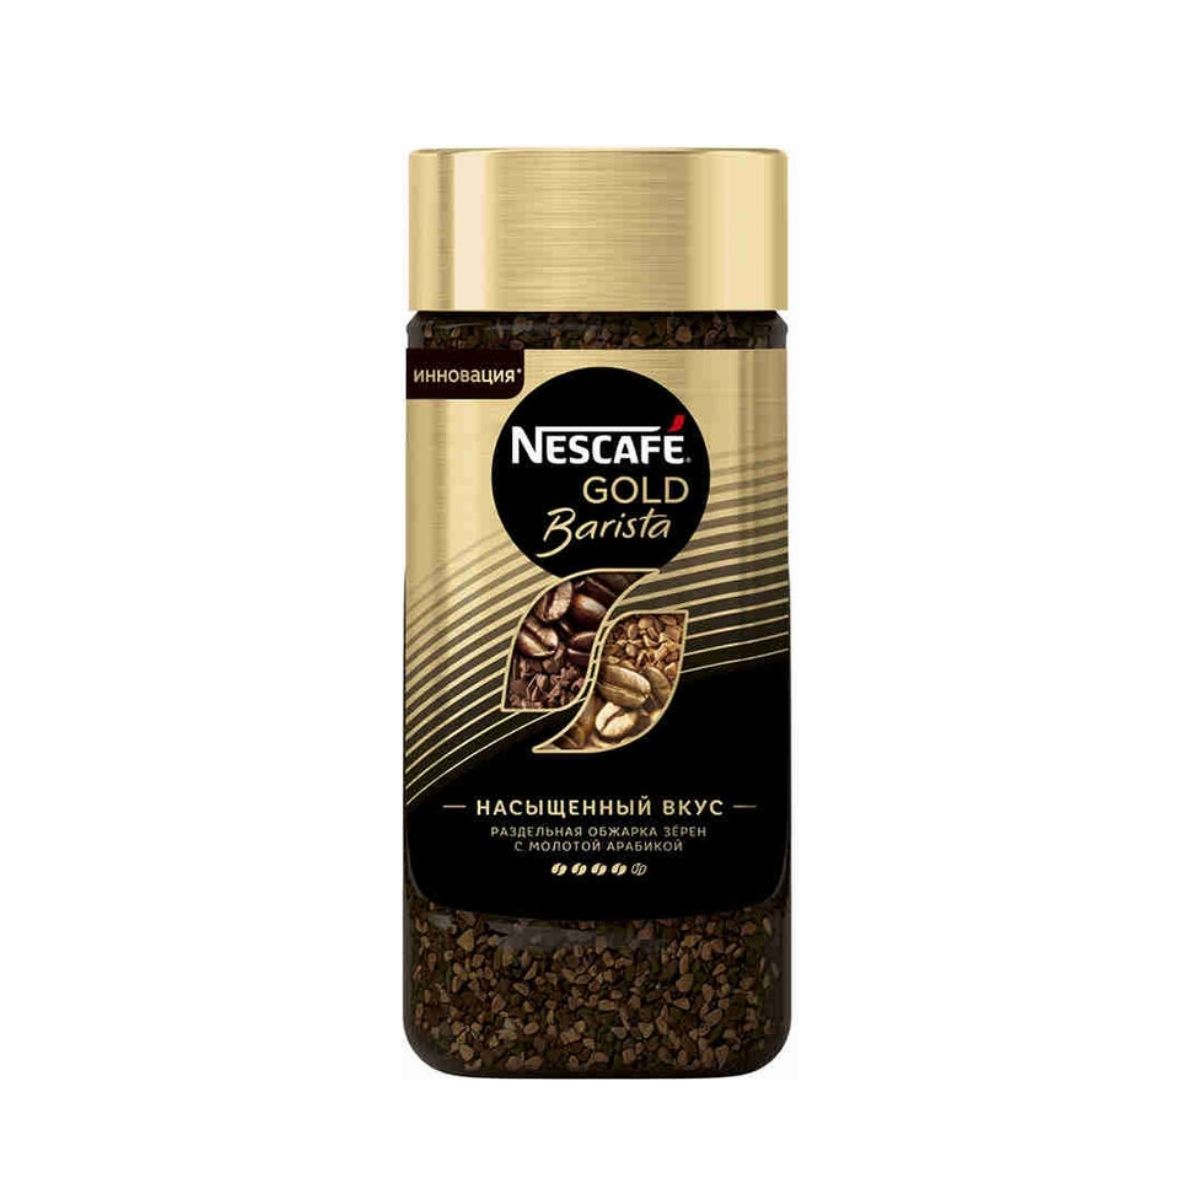 Nescafe Gold Barista Coffee (85 g) Nescafe